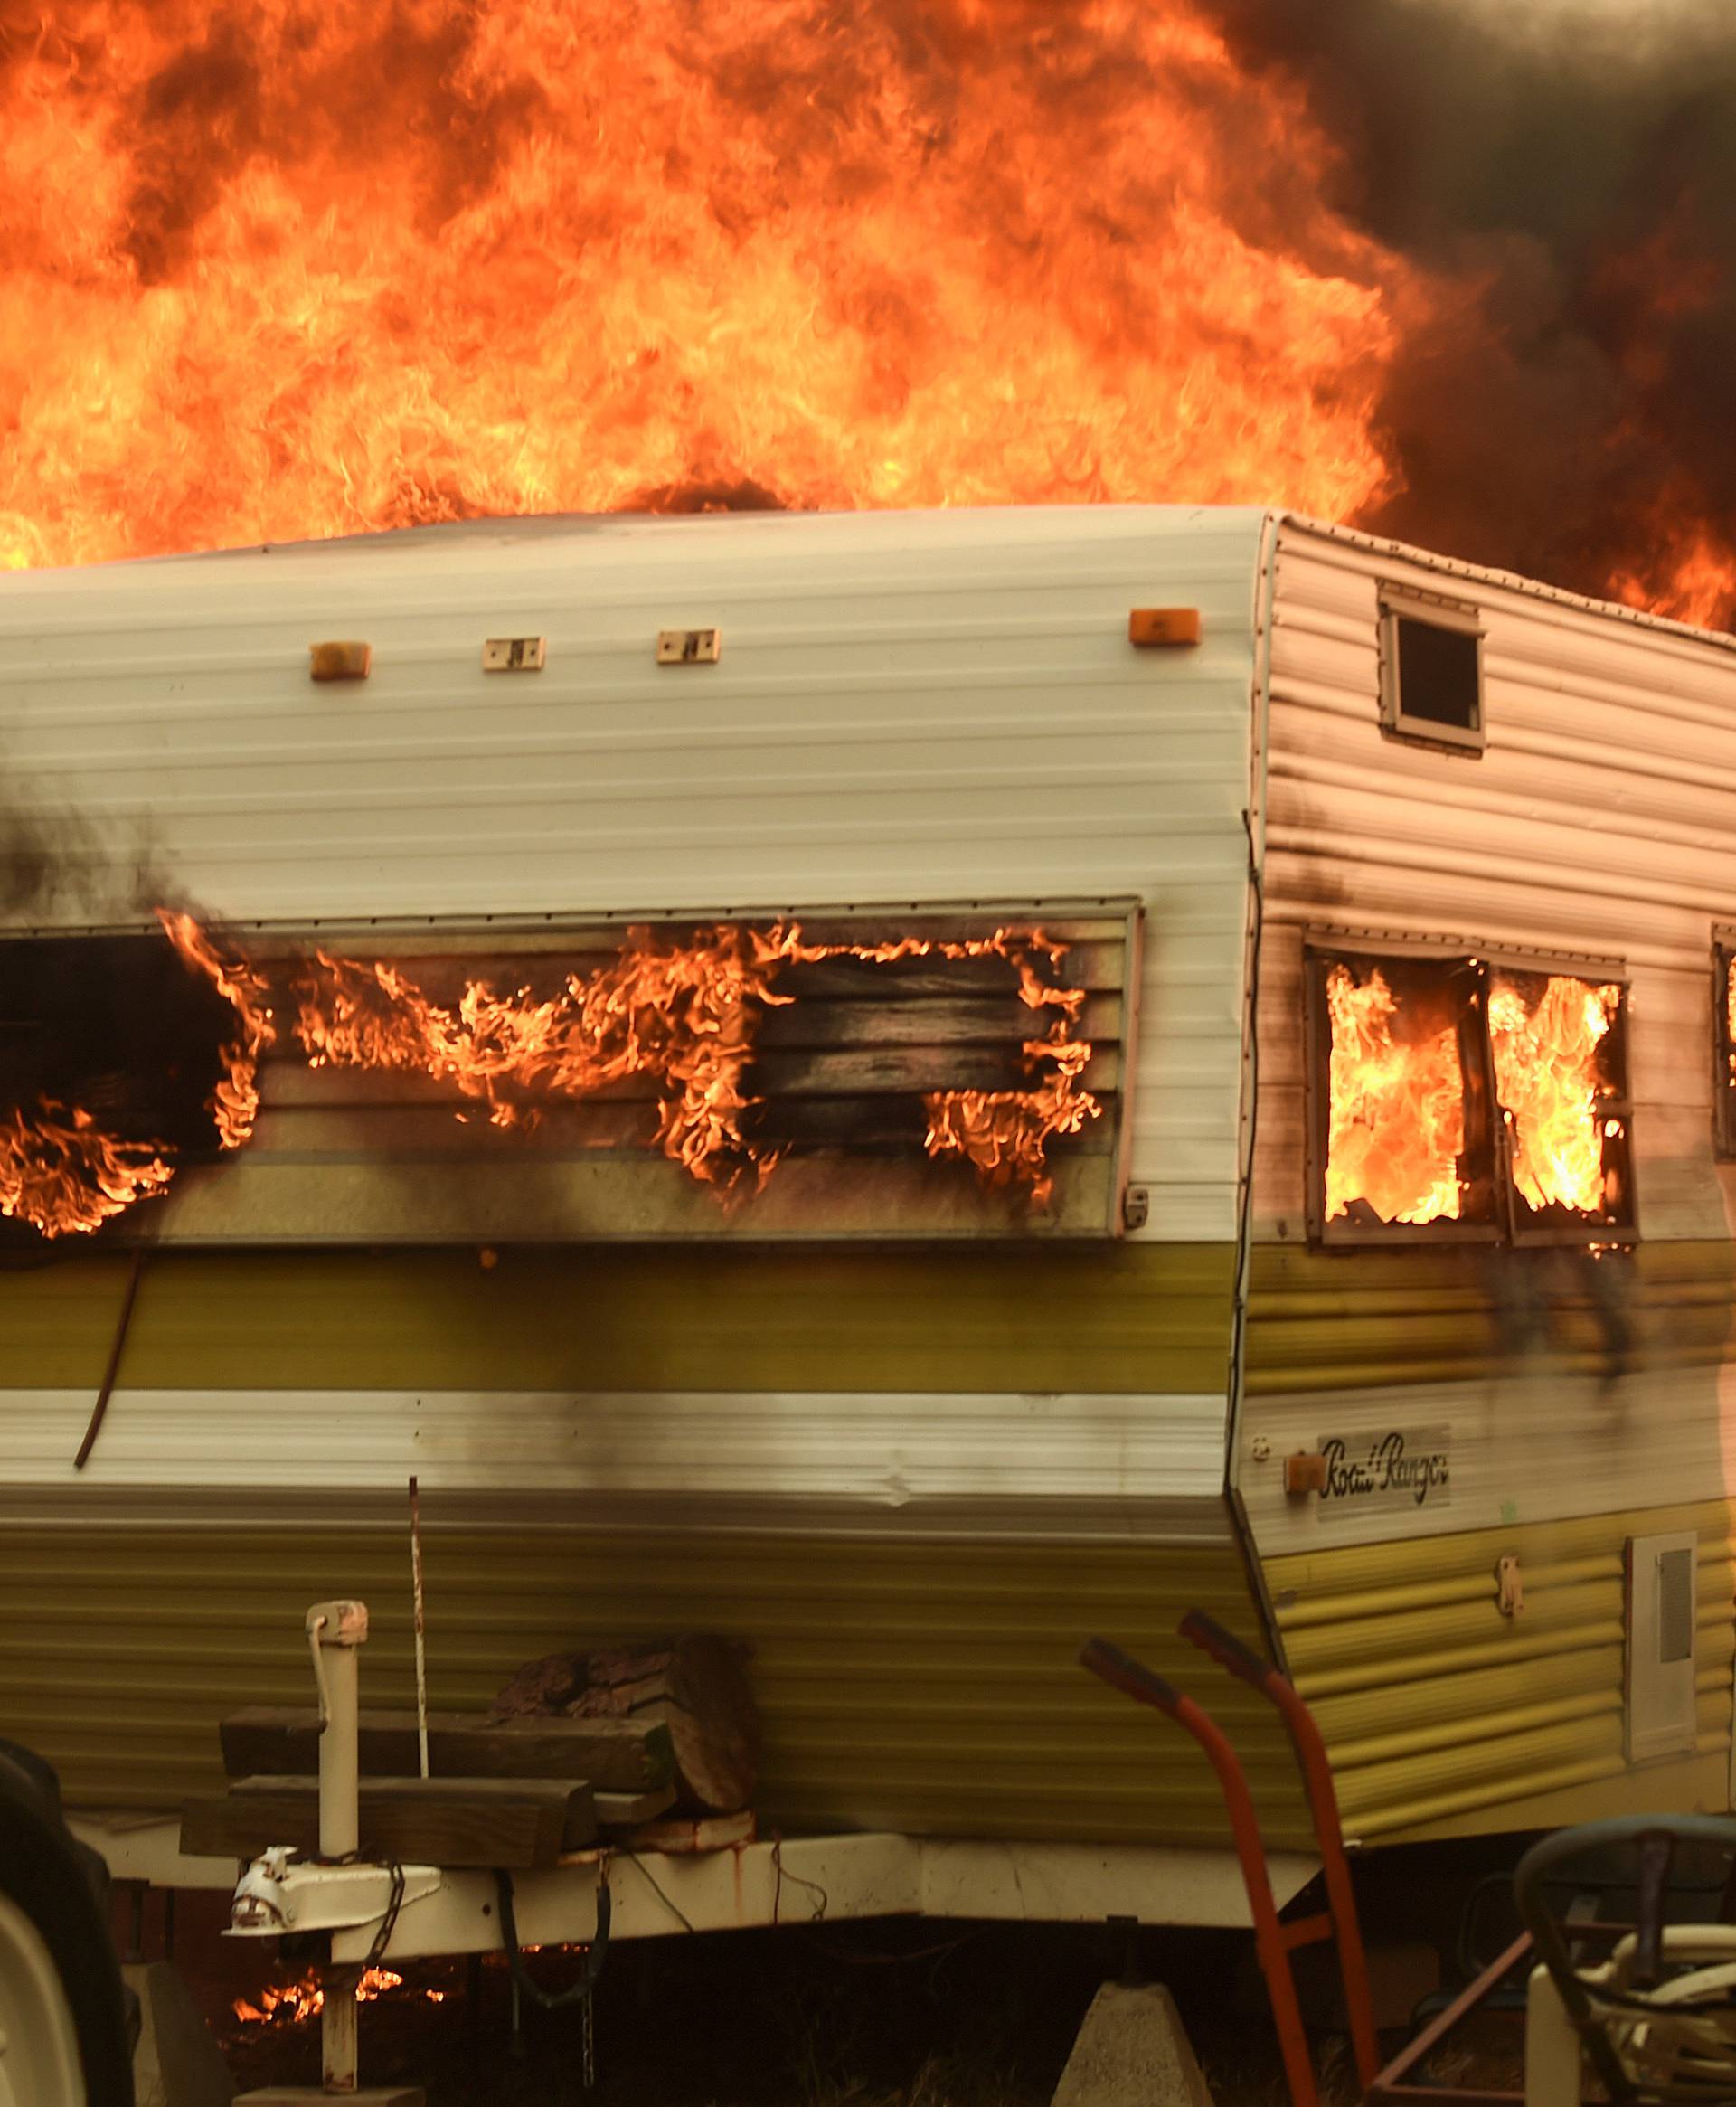 Flames from the Erskine Fire engulf a trailer near Weldon, California